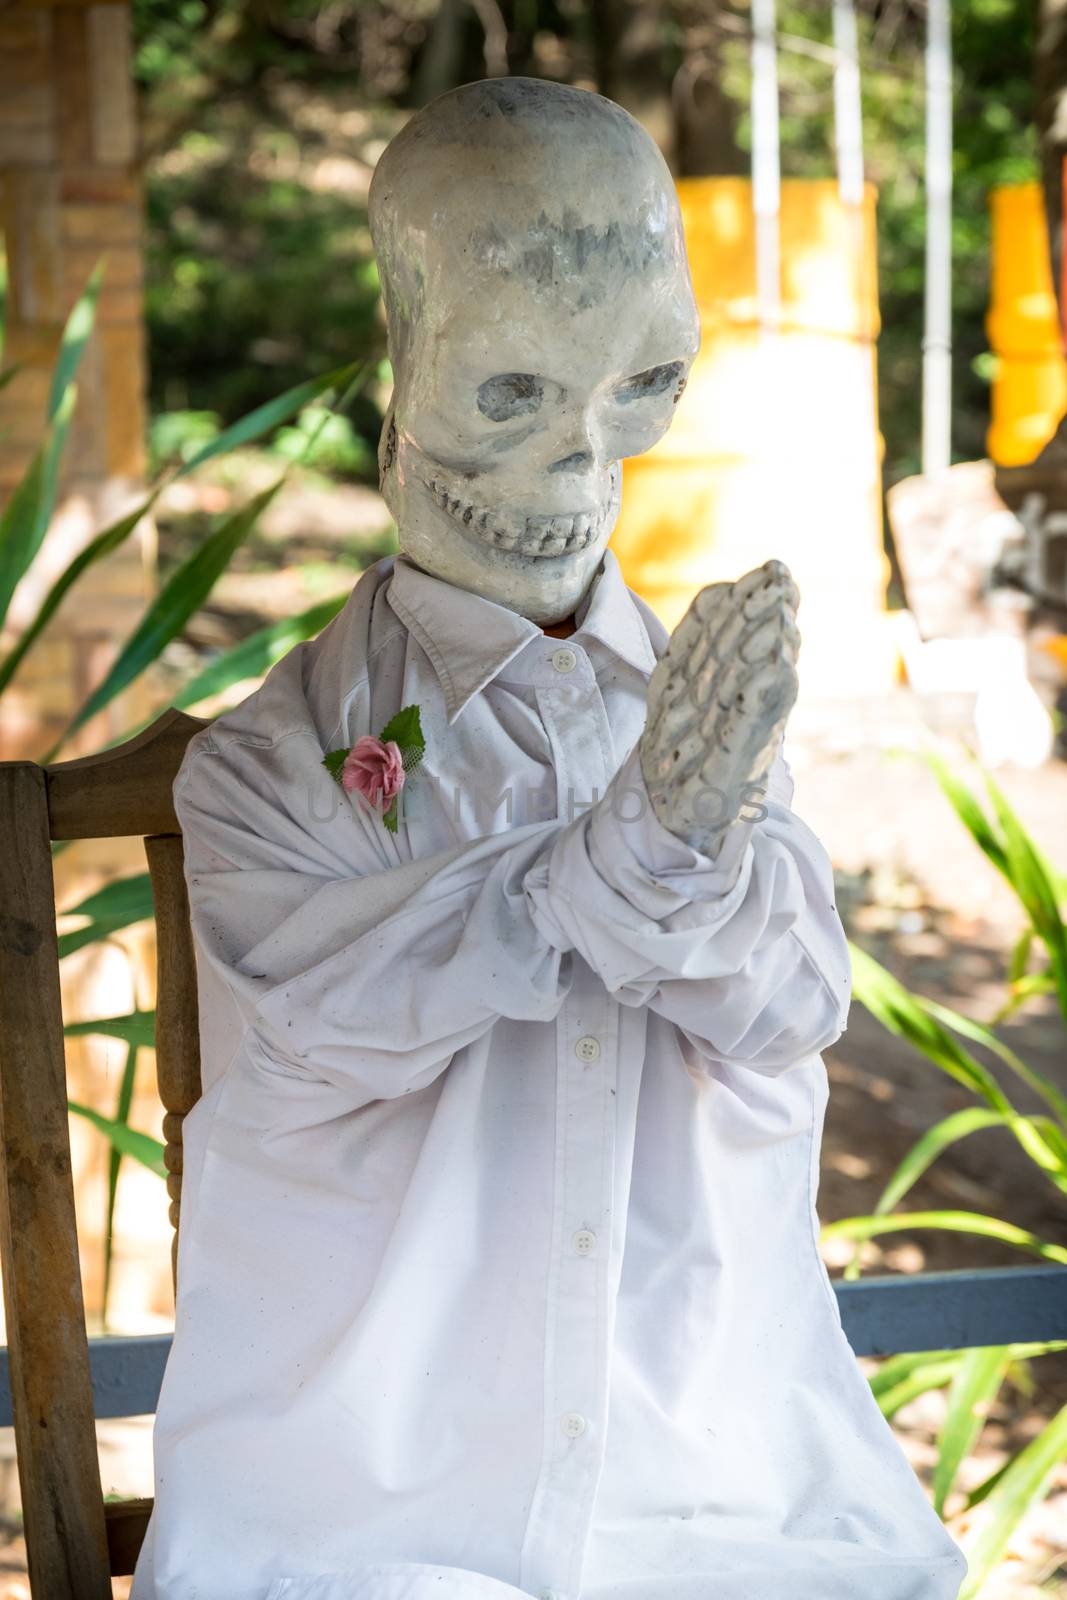 Skeleton wearing a white shirt. by wattanaphob